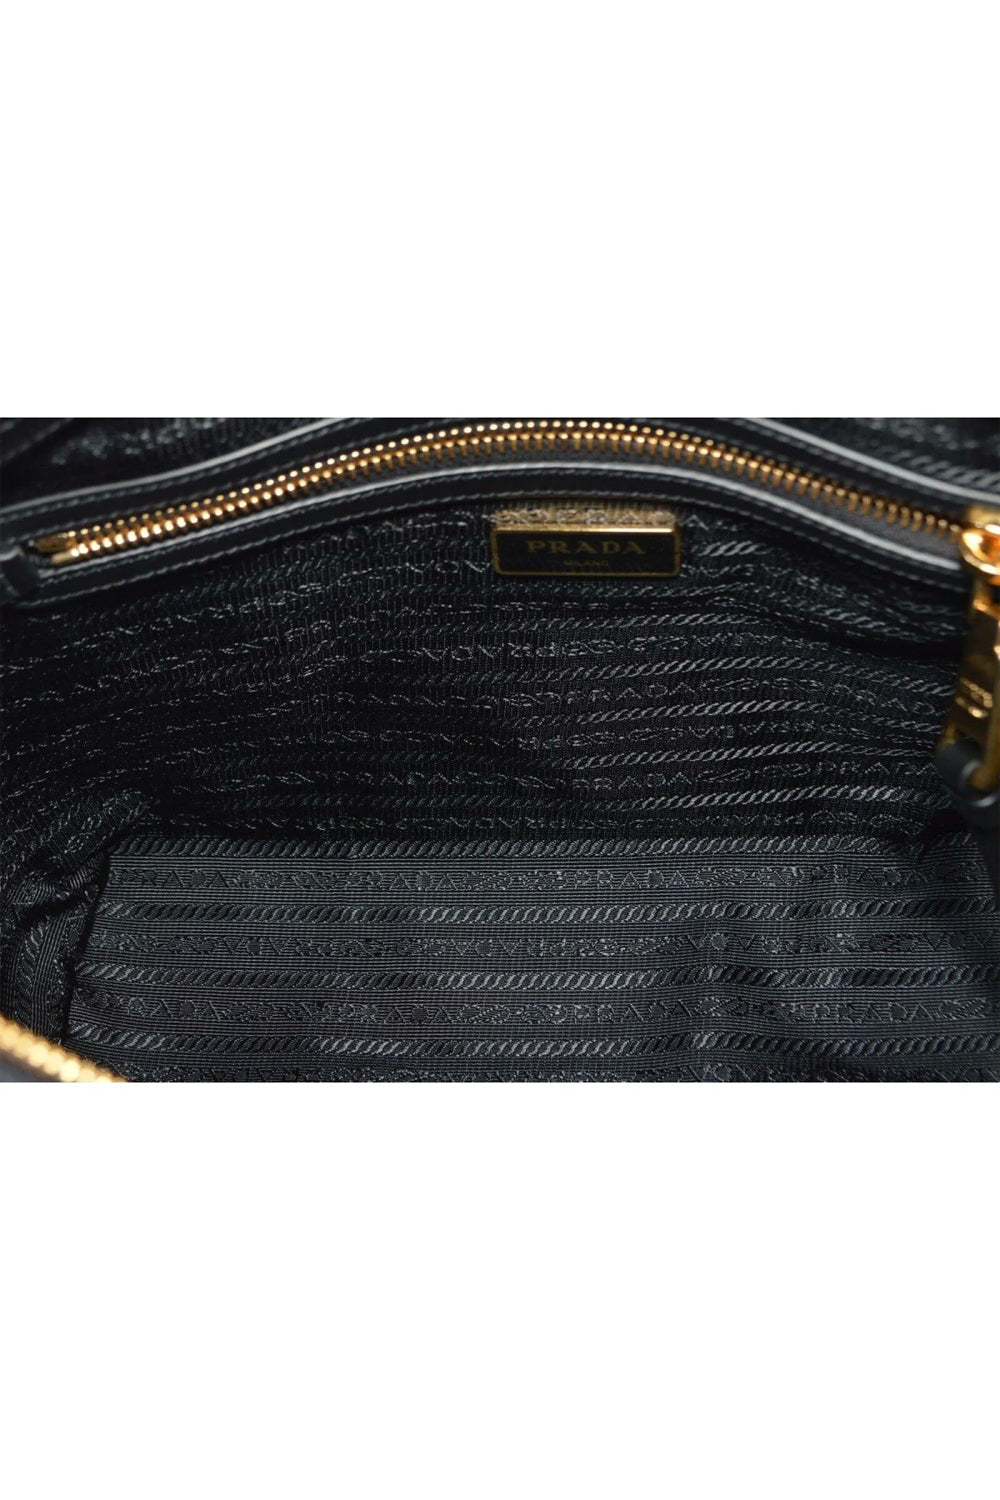 Prada Tessuto Nylon Leather Two-Way Satchel Handbag